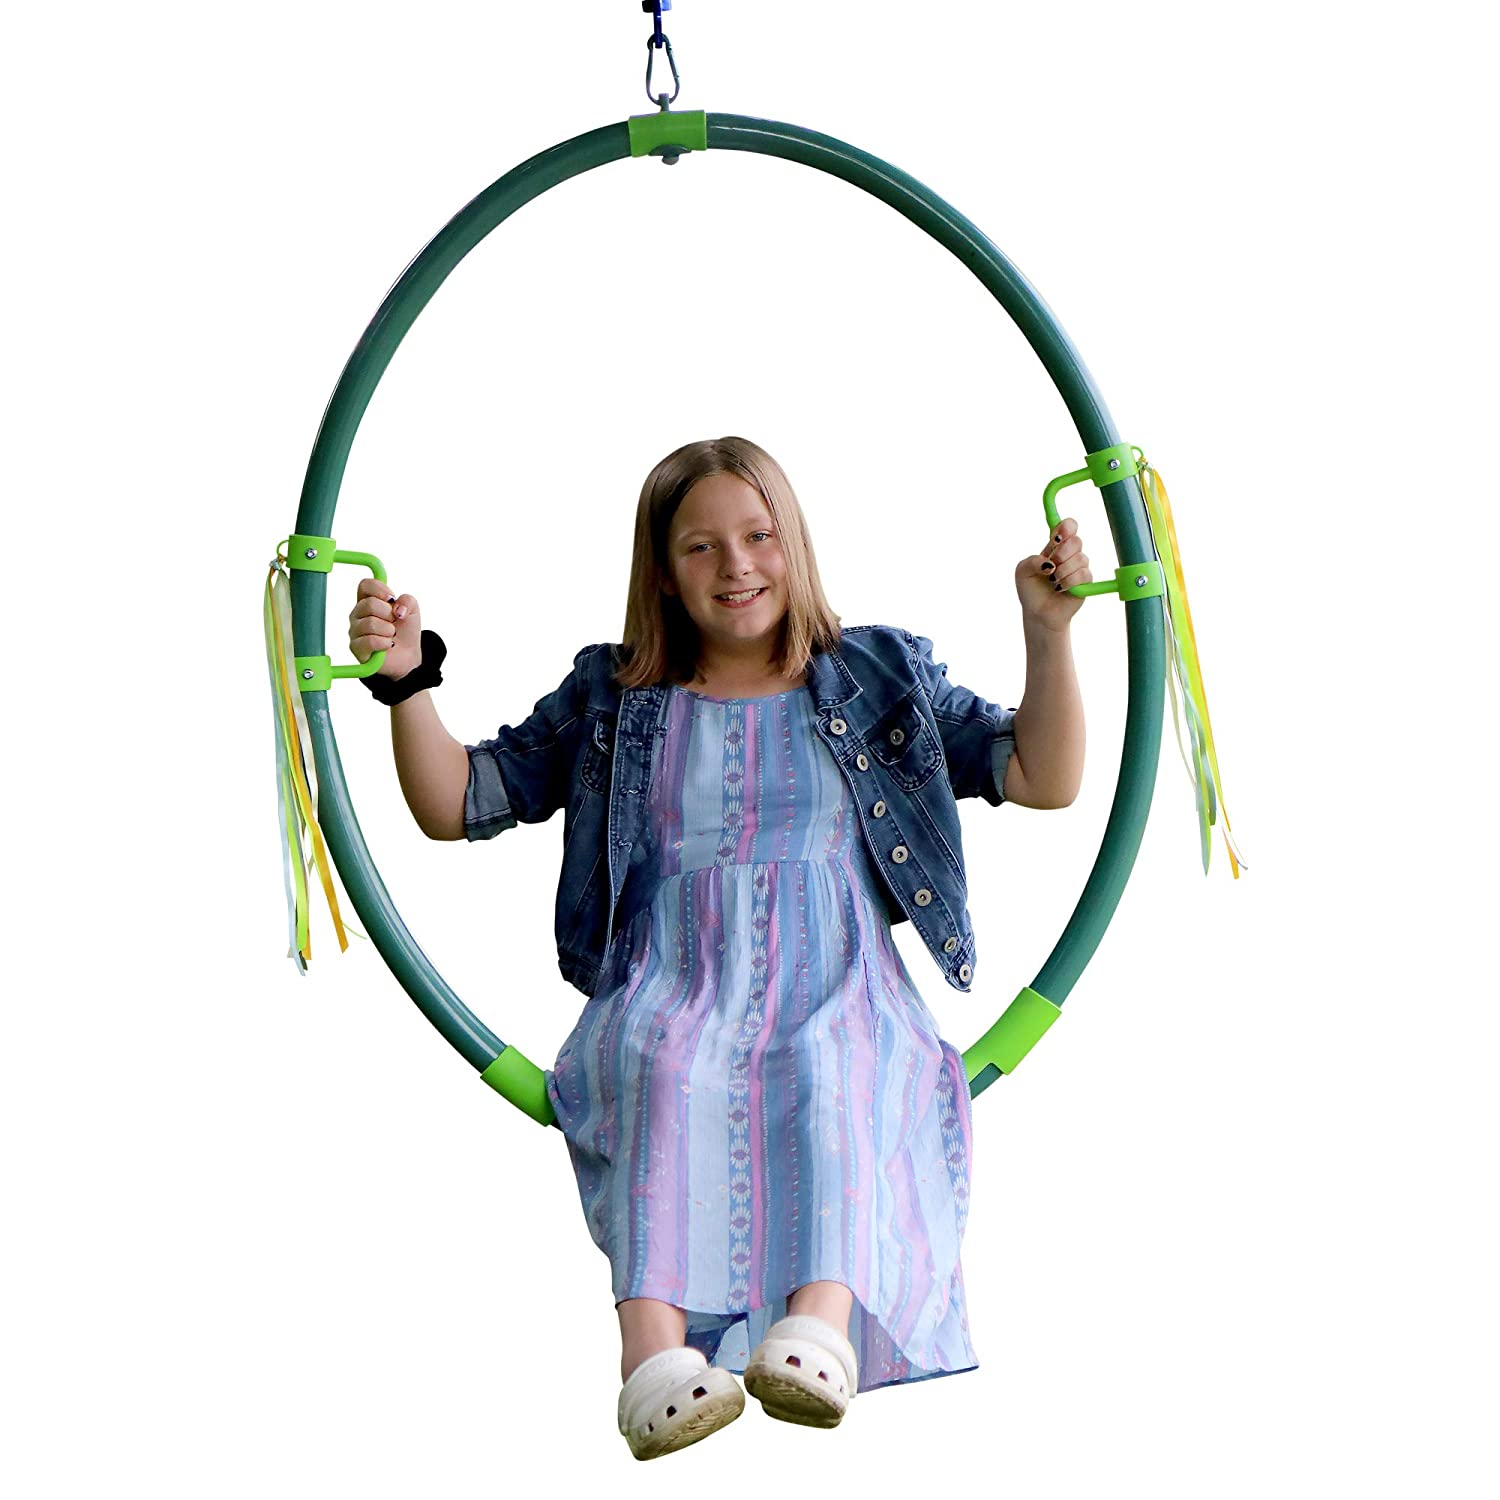 Hoopla Spinning Ring Swing